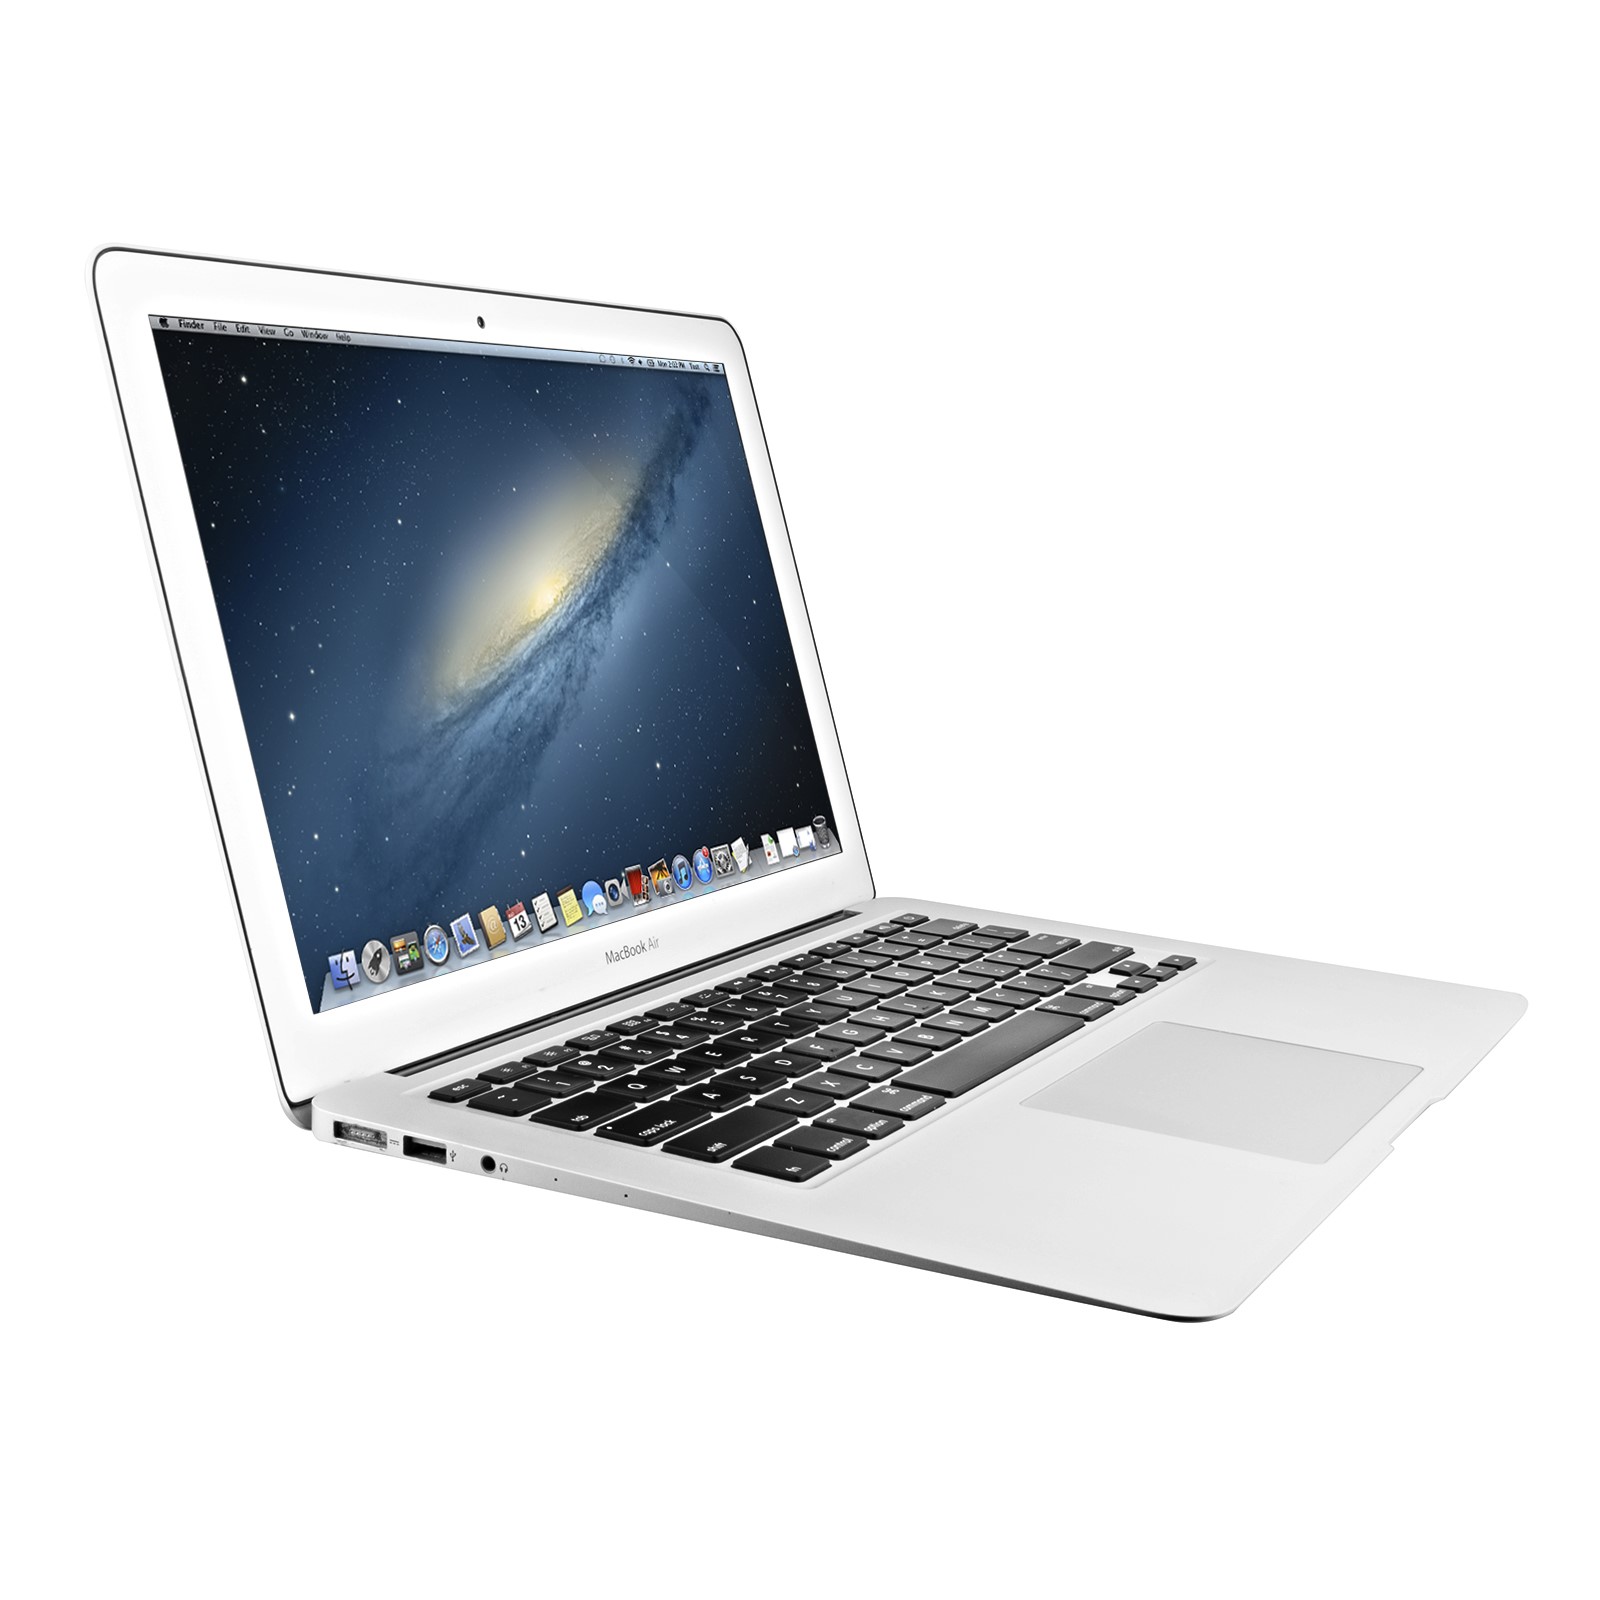 Restored Apple MacBook Air, 13.3" Laptop, Intel Core i5, 4GB RAM, 128GB SSD, Mac OS, Silver, MD760LL/A (Refurbished) - image 2 of 6